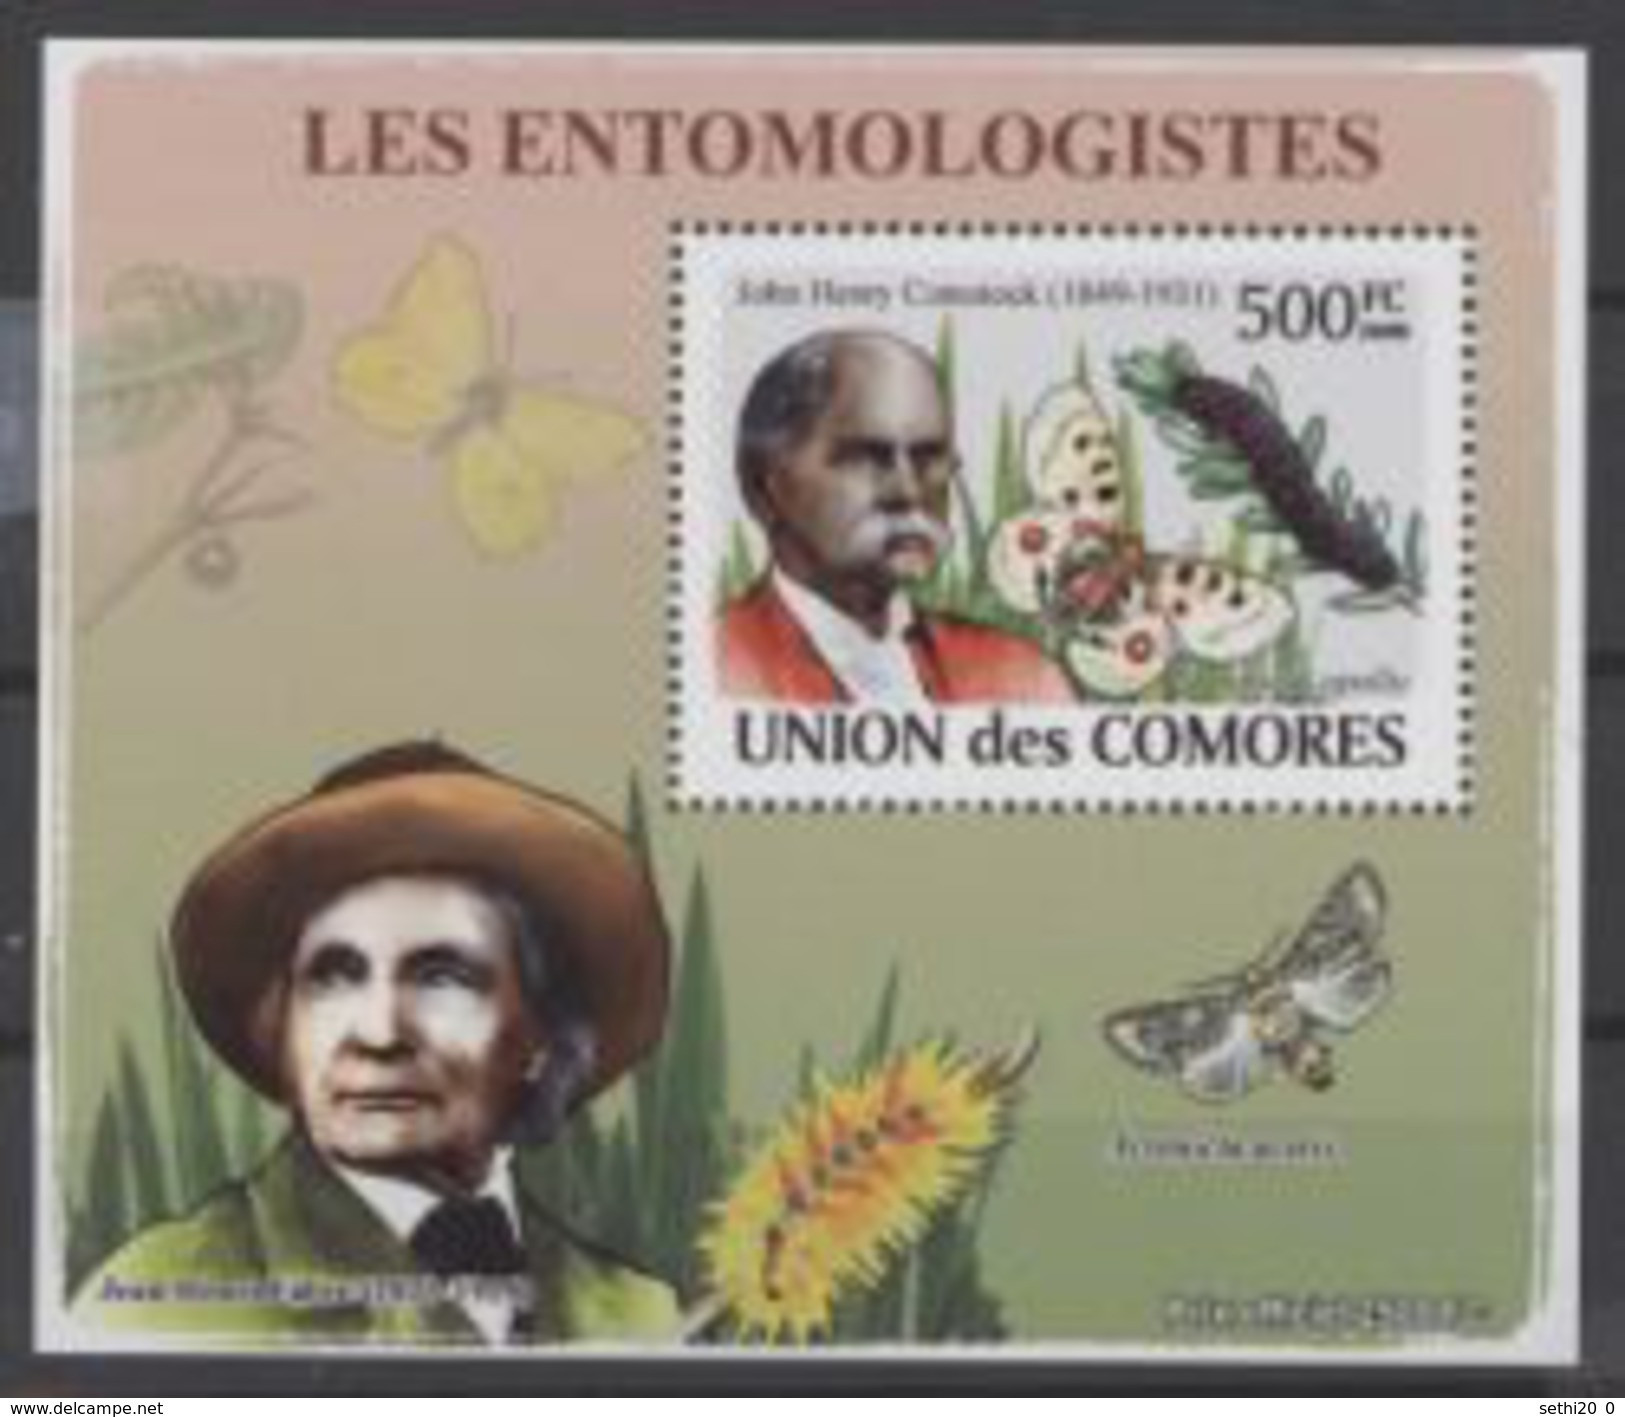 Comores John Henry COMSTOCK Jean Henri FABRE  On Margin Entomologists Butterfly Papillon  BF Luxe Perf - Farfalle